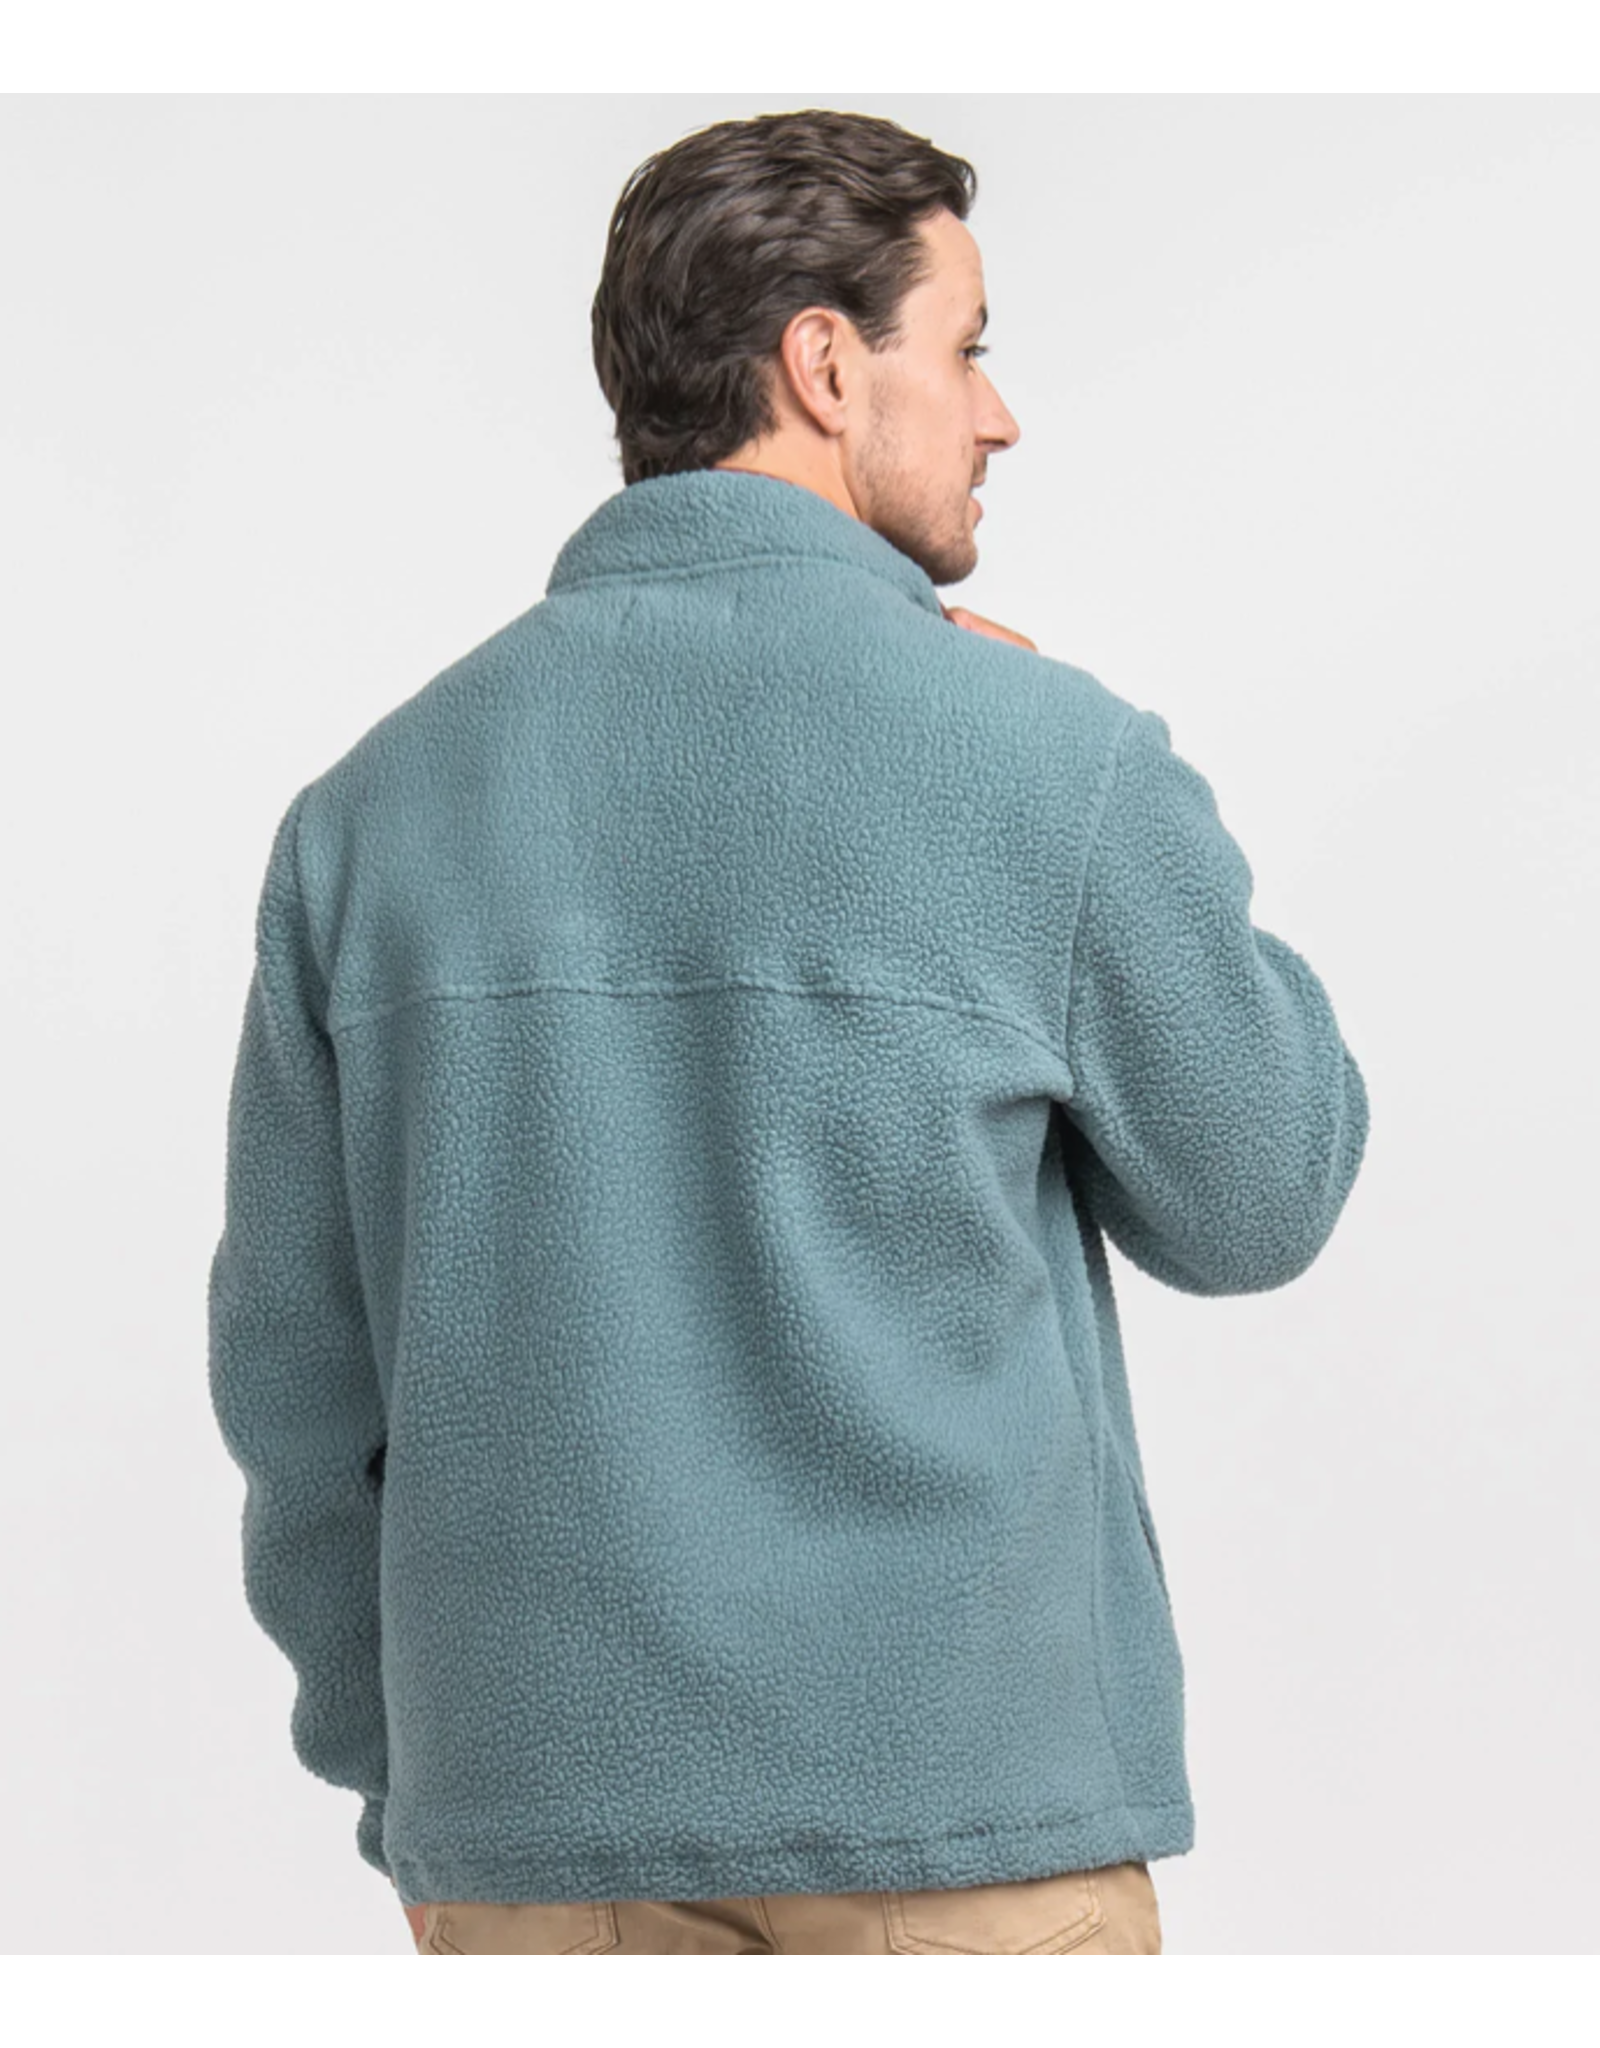 Southern Shirt Company Kodiak Fleece Pullover Blue Forest